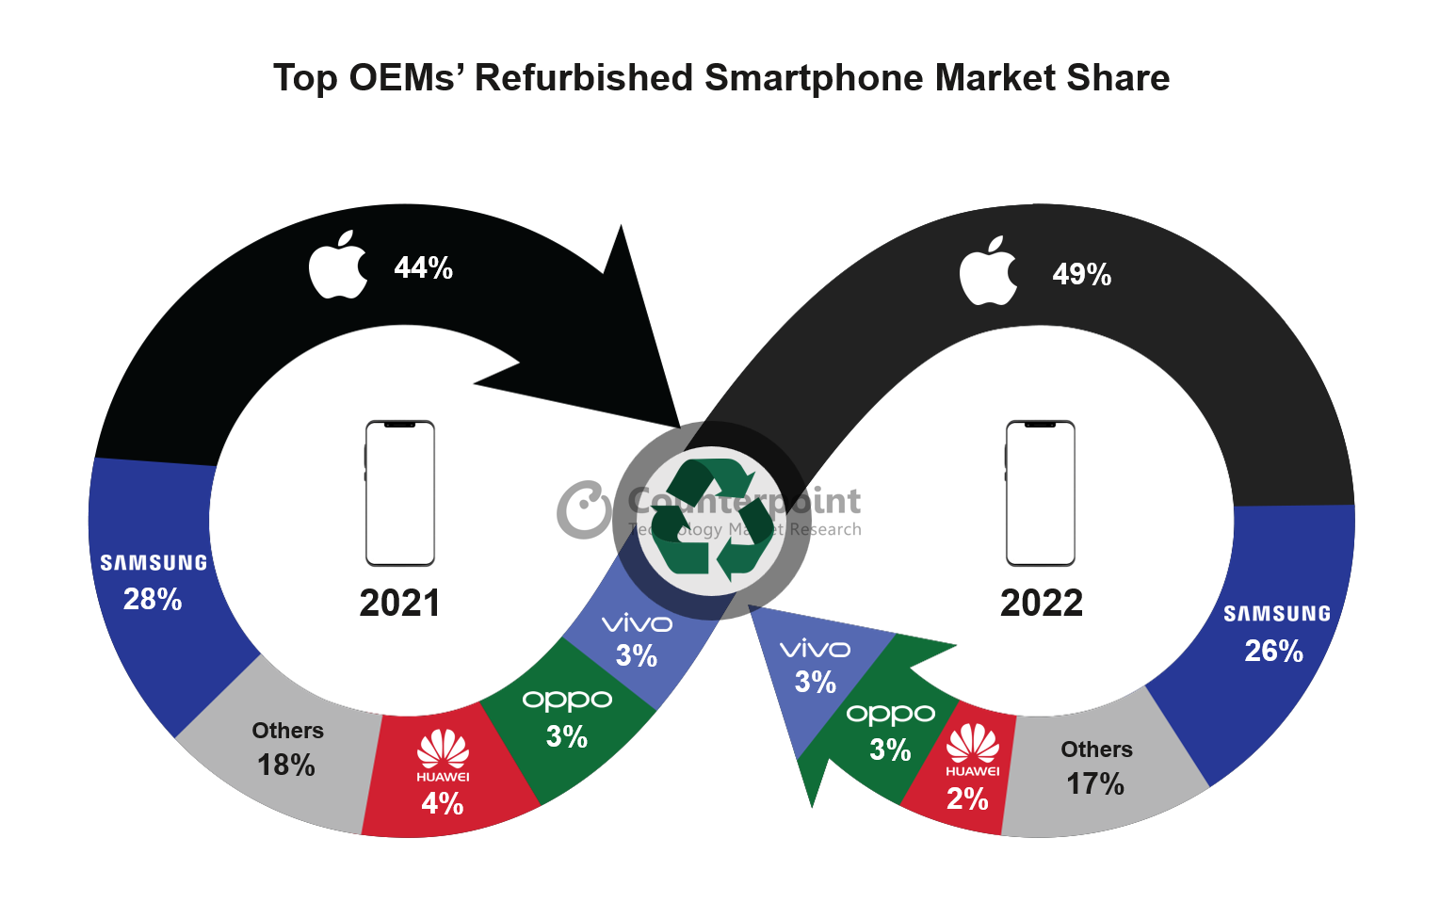 Counterpoint Research：苹果翻新 iPhone 2022 年销量同比增长 16%，二手智能手机市场份额达 49%